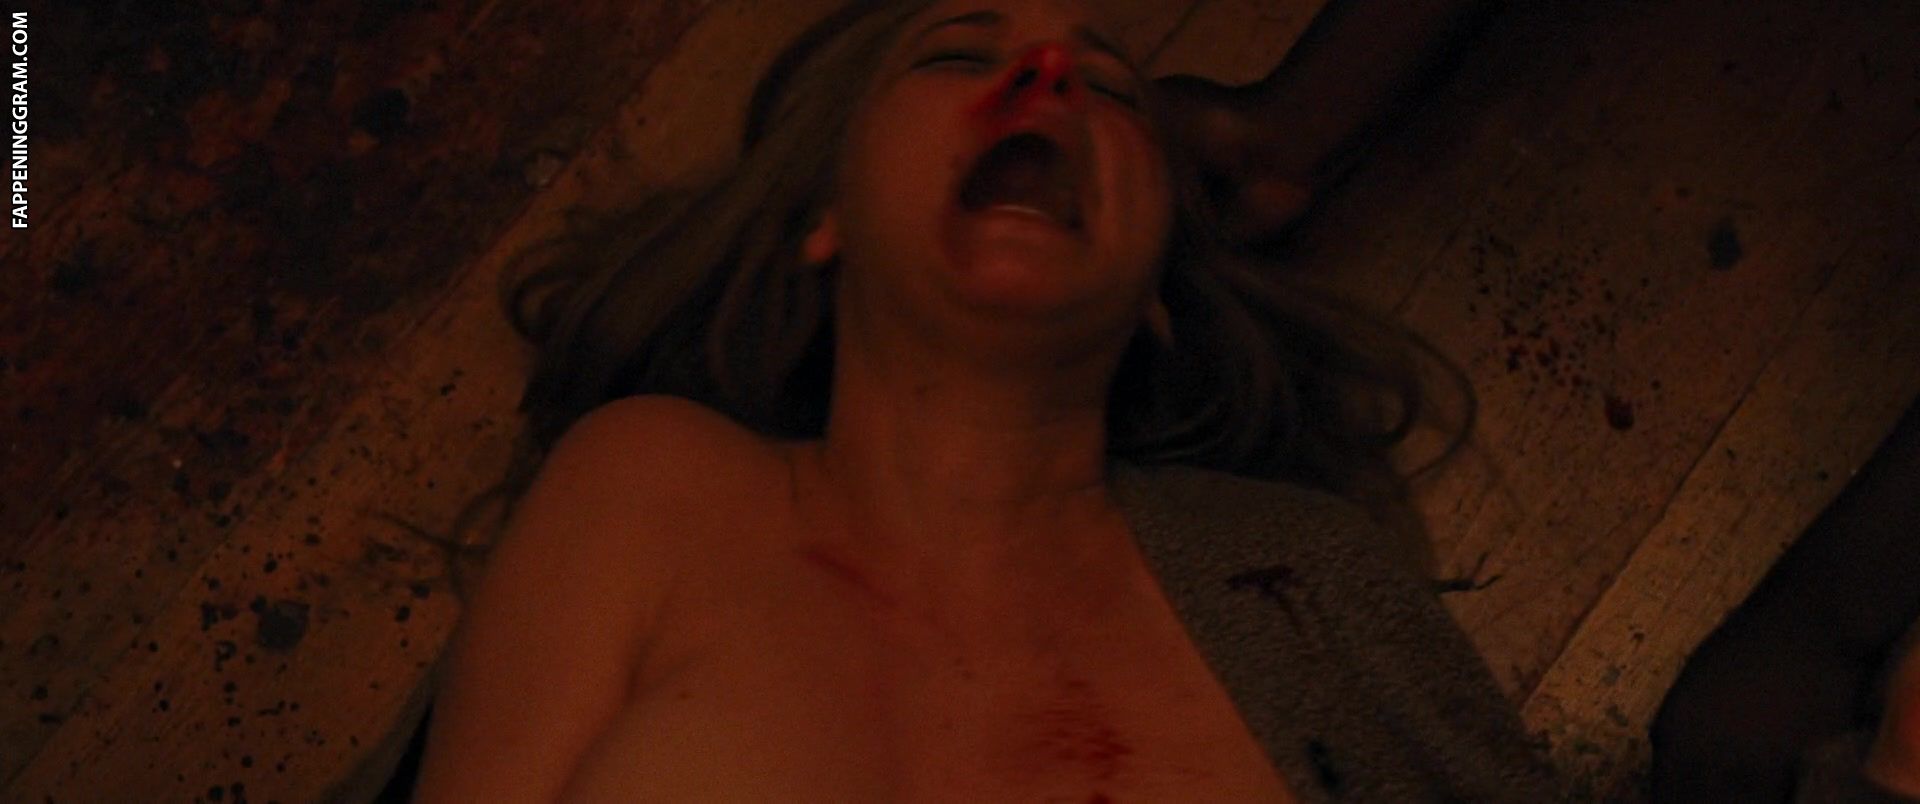 Jennifer Lawrence Nude.